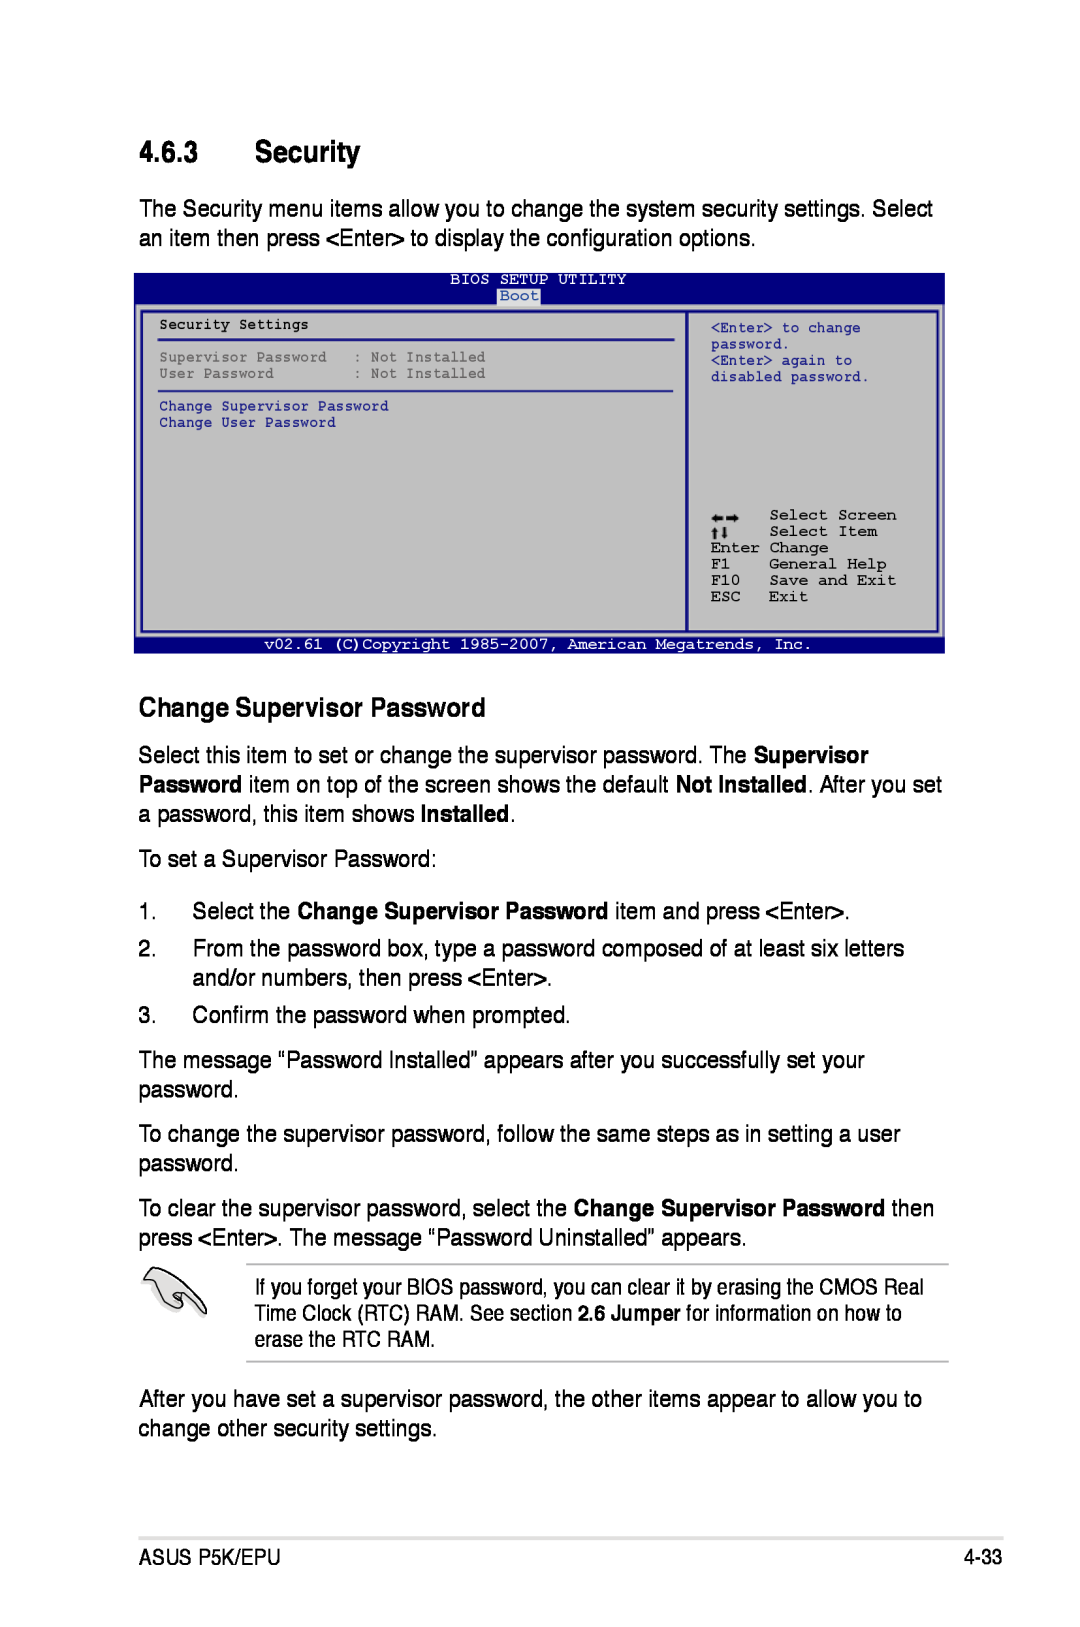 Asus P5K/EPU manual Security, Change Supervisor Password 